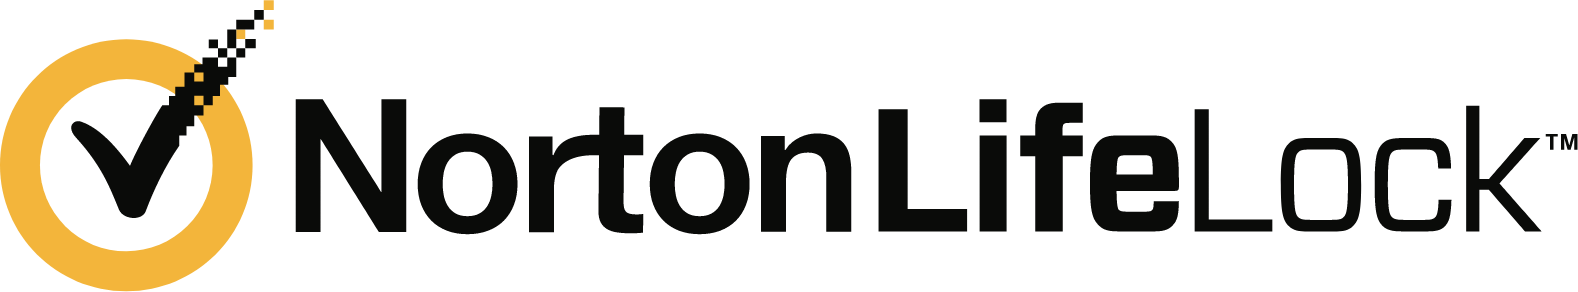 NortonLifeLock
 logo large (transparent PNG)